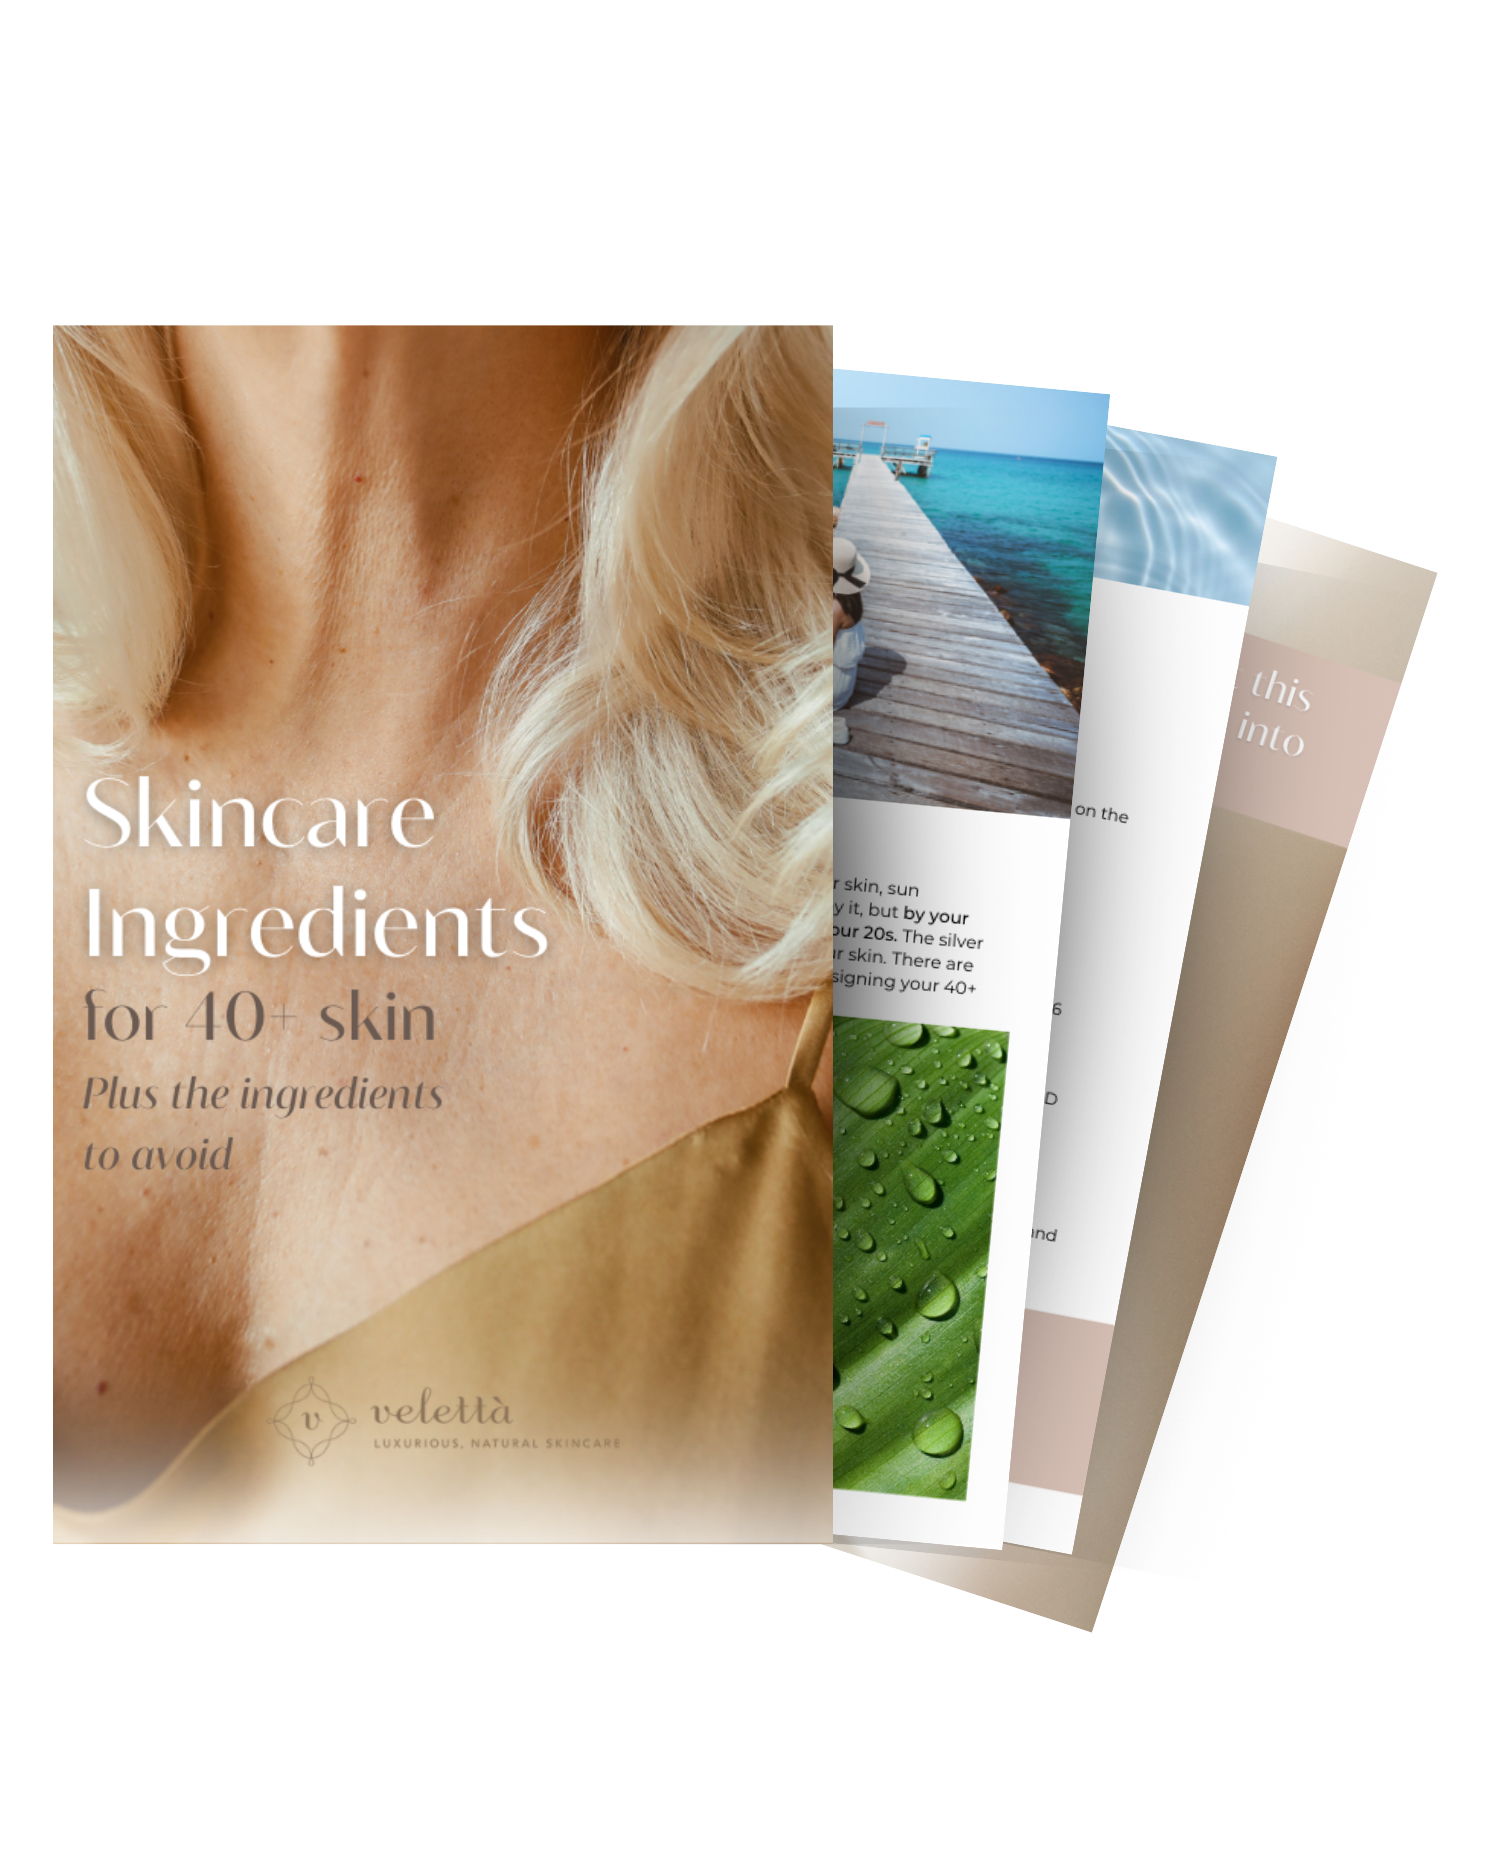 eBook: Skincare Ingredients for 40+ Skin